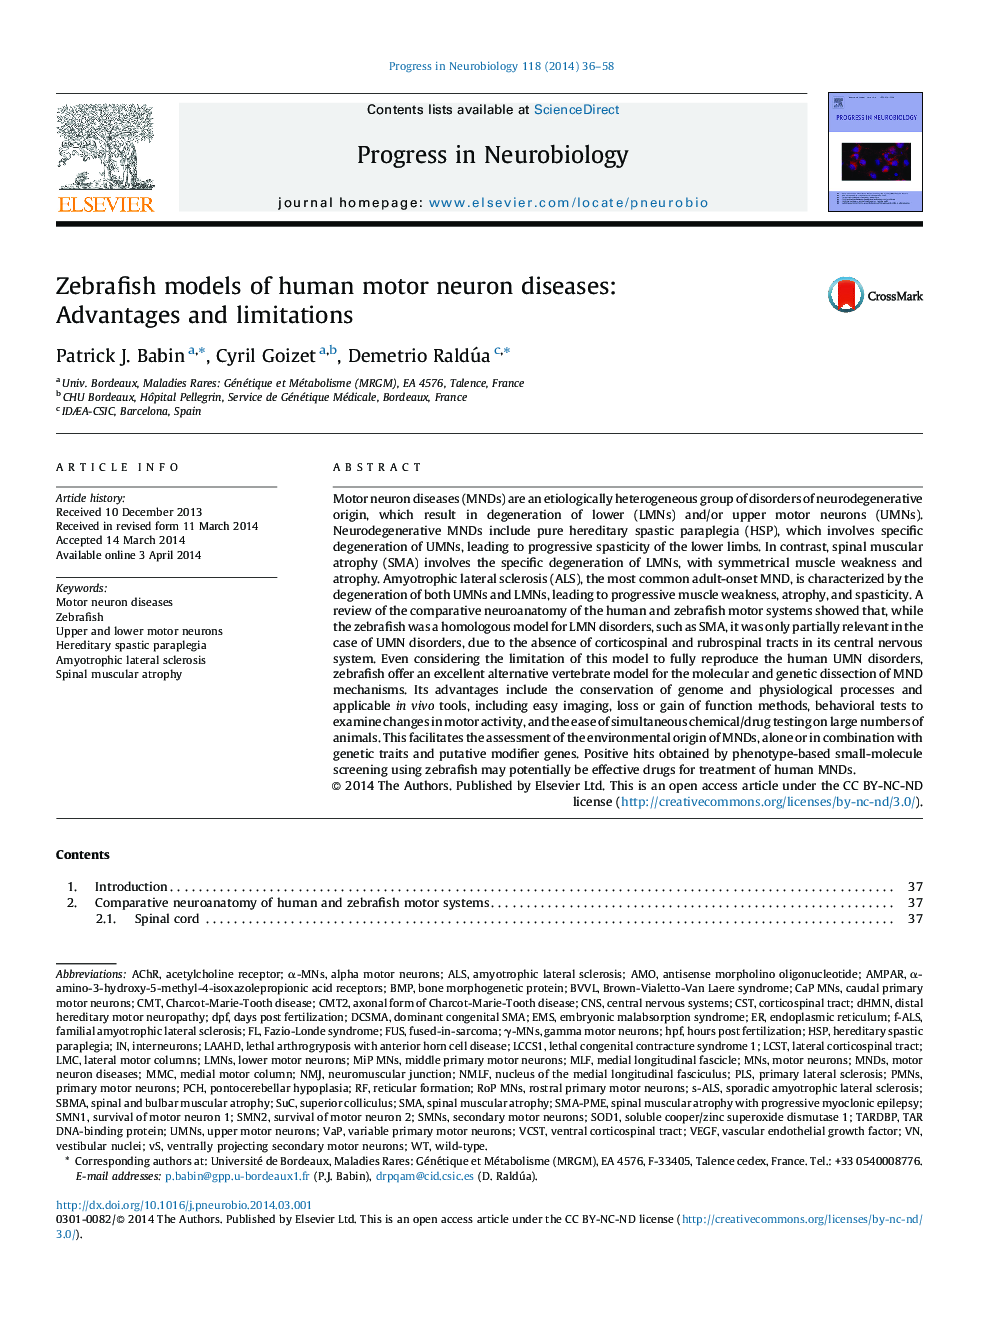 Zebrafish models of human motor neuron diseases: Advantages and limitations